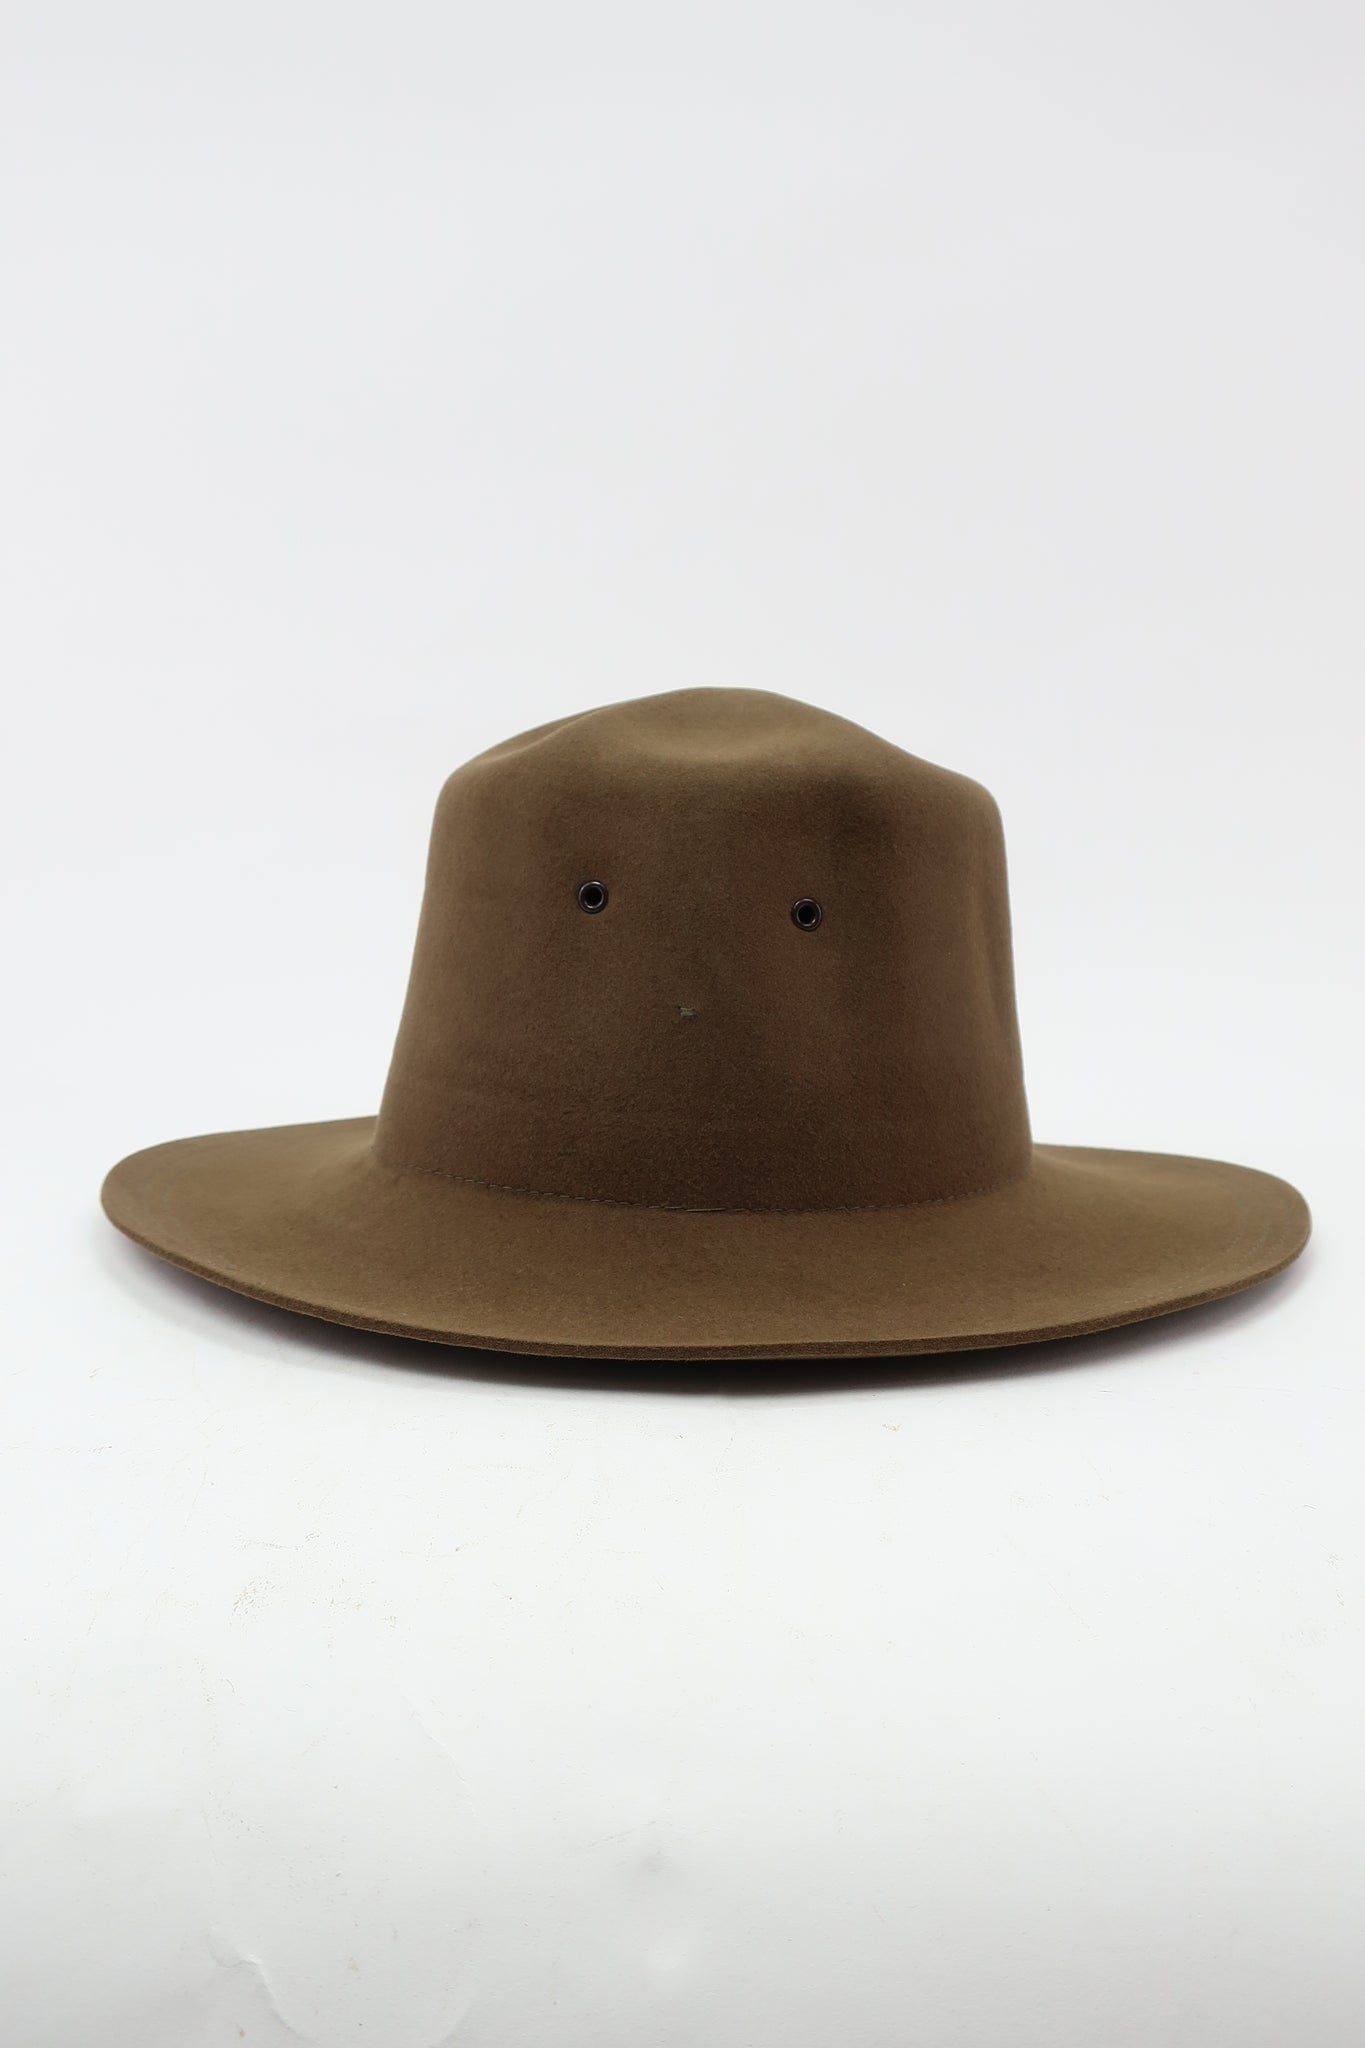 New Zealand Type 3 Lemon Squeezer hat – Warwick Firearms and Militaria